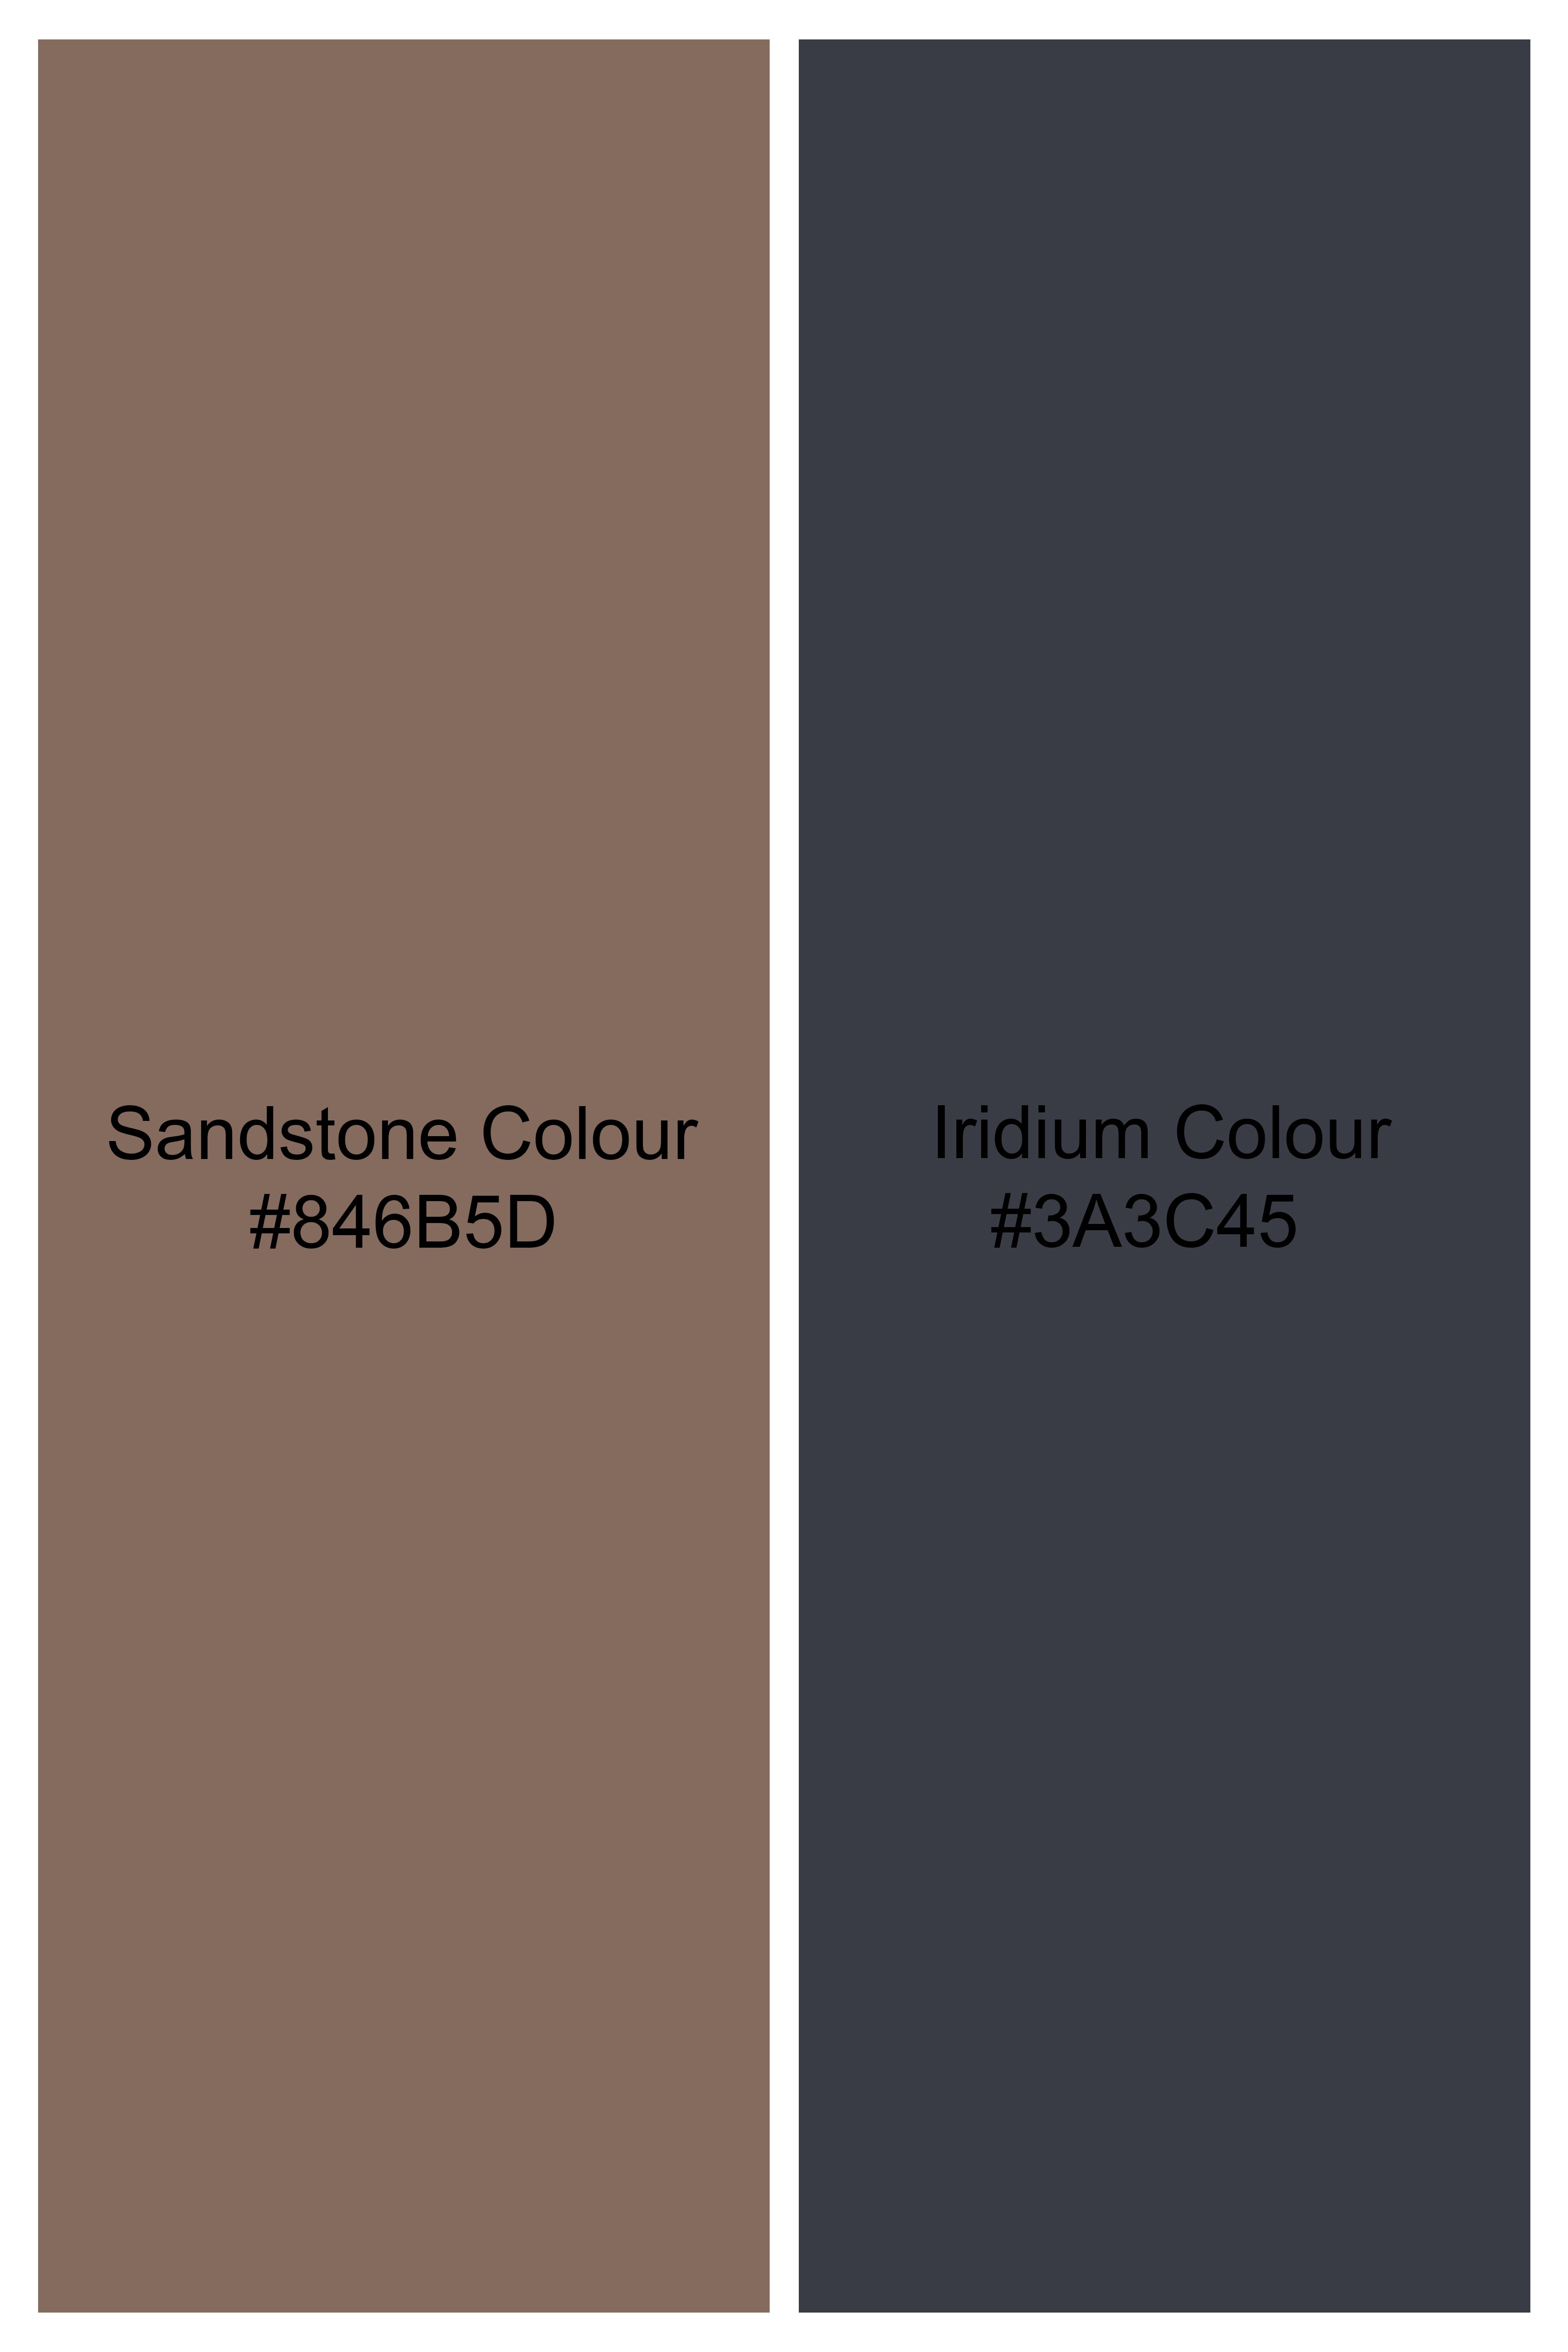 Sandstone Brown and Iridium Gray Denim Top